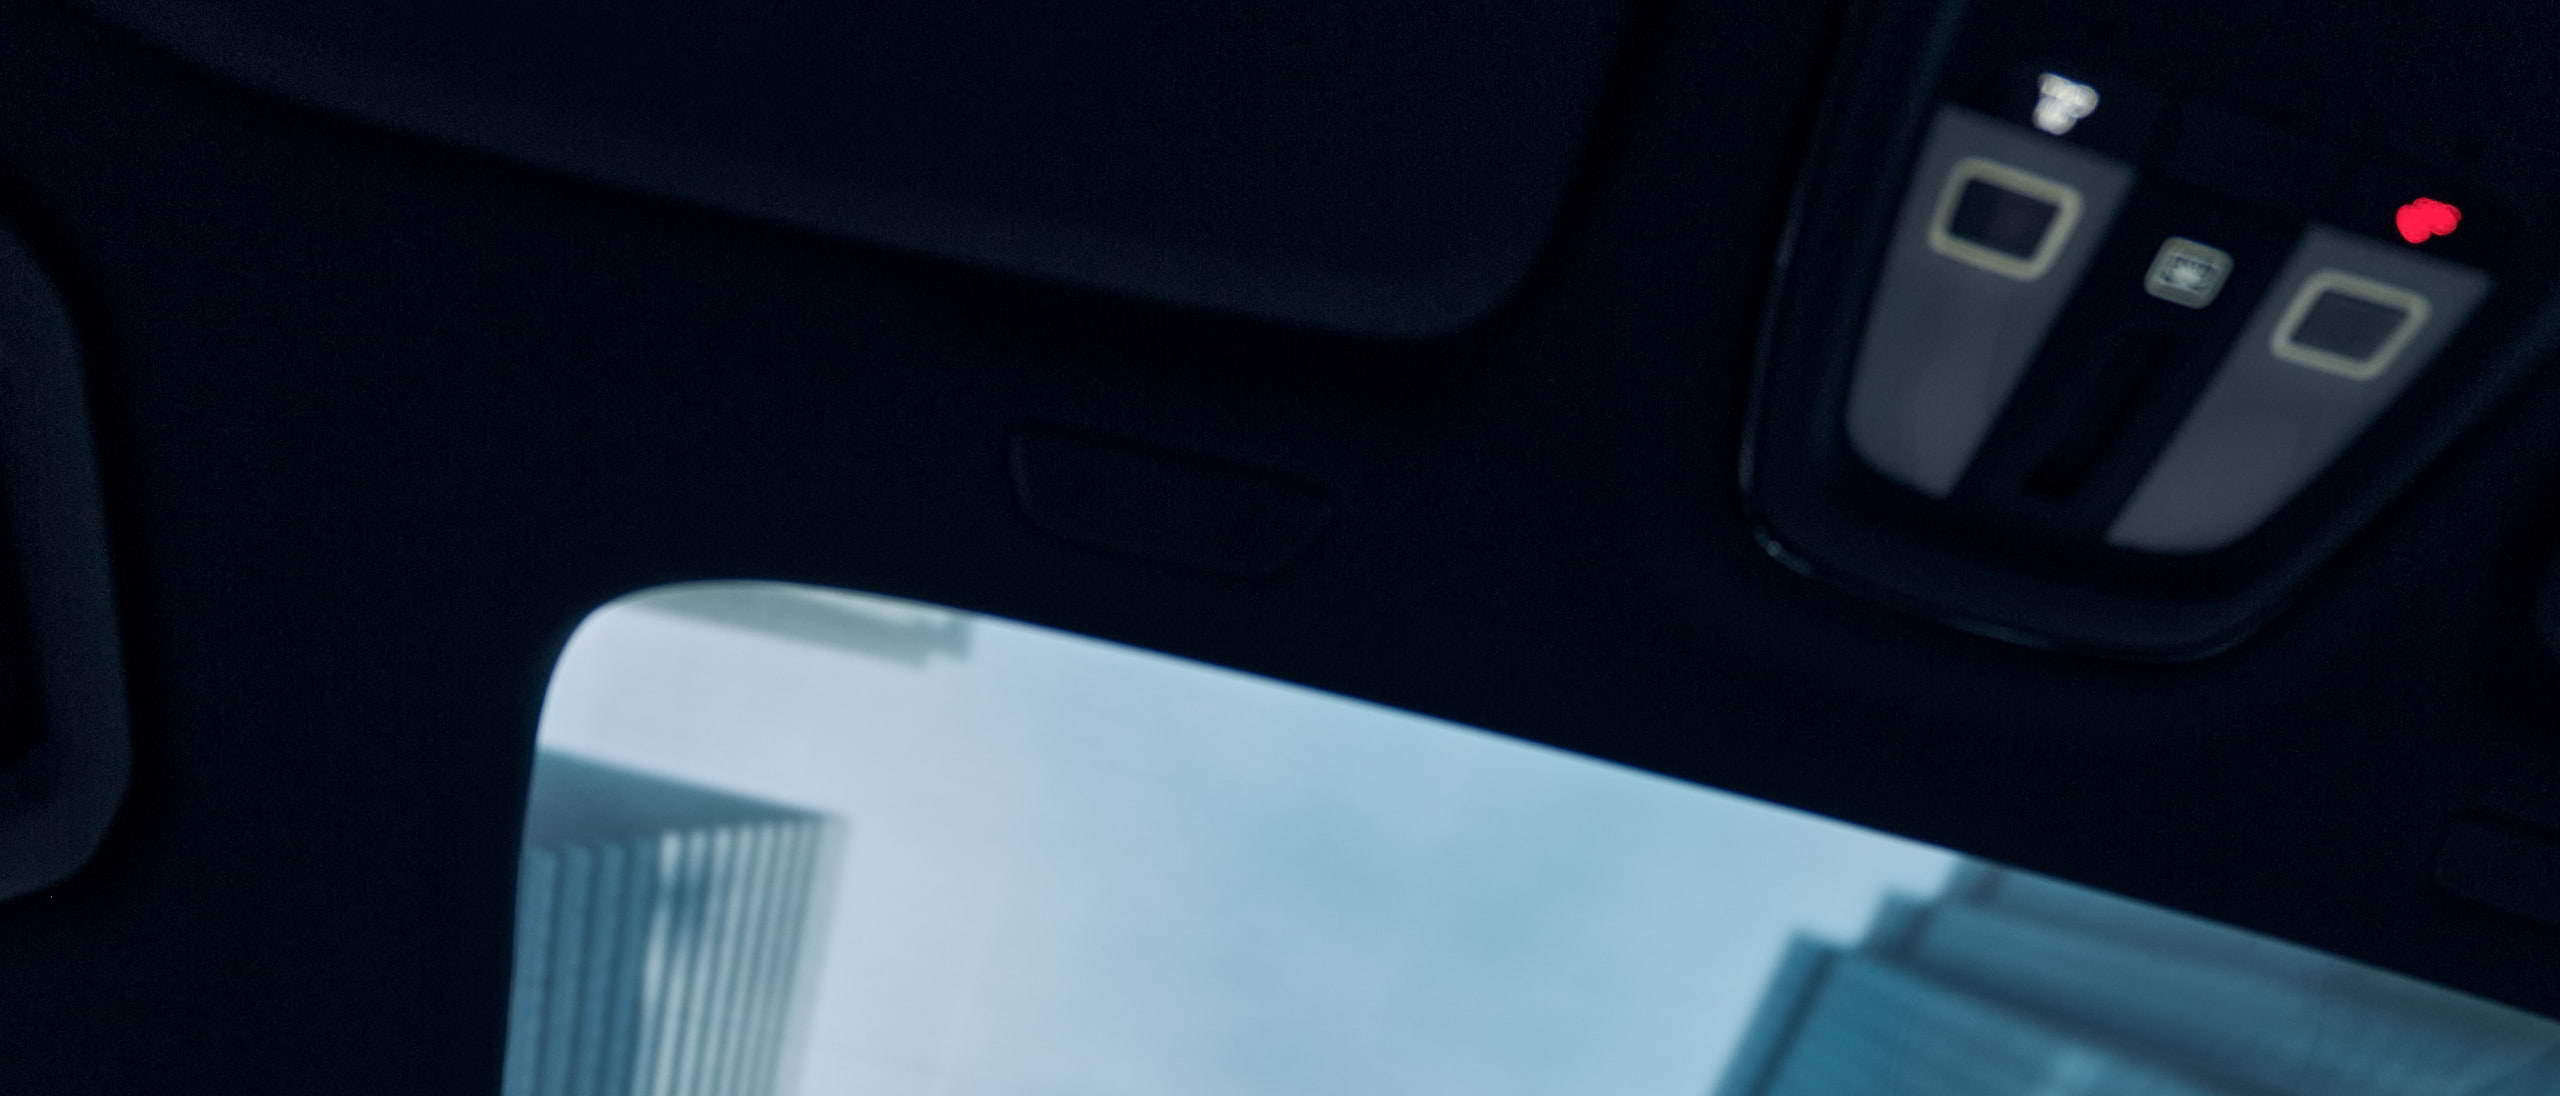 Skyskrapor syns genom panoramaglastaket på Volvo i rörelse.